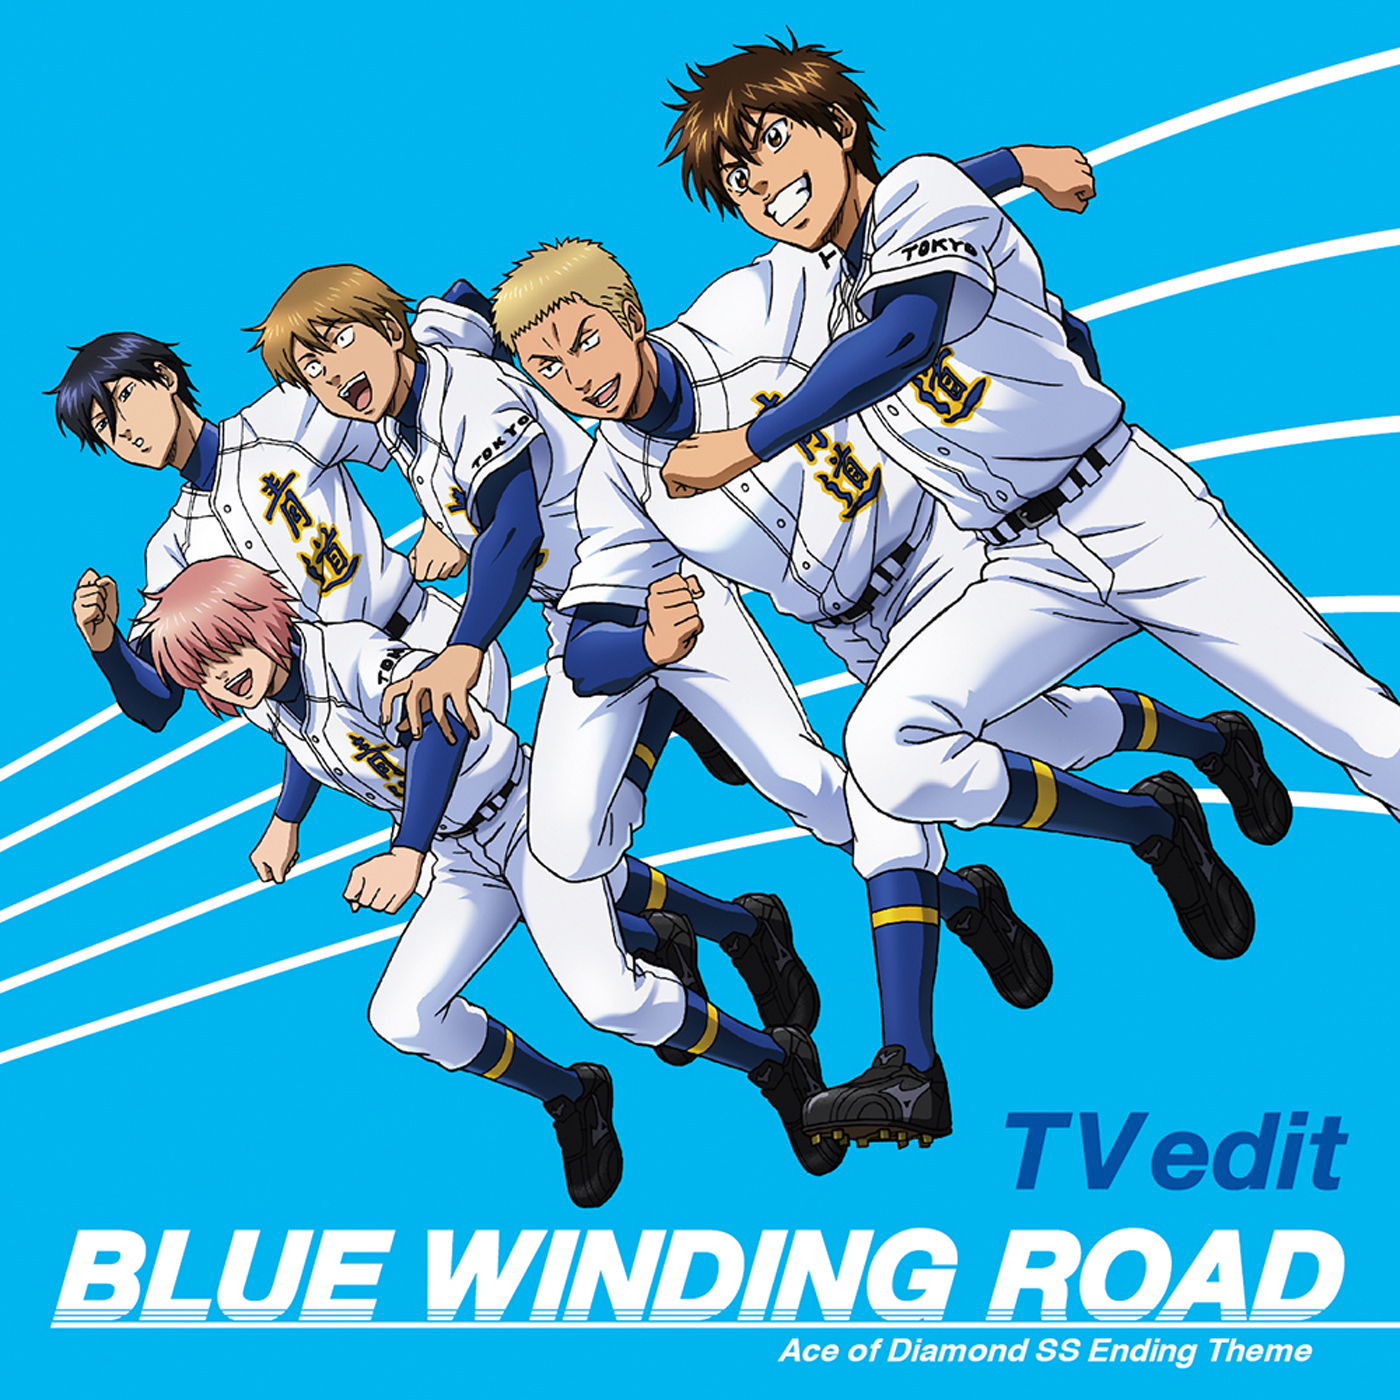 BLUE WINDING ROAD (TV edit)